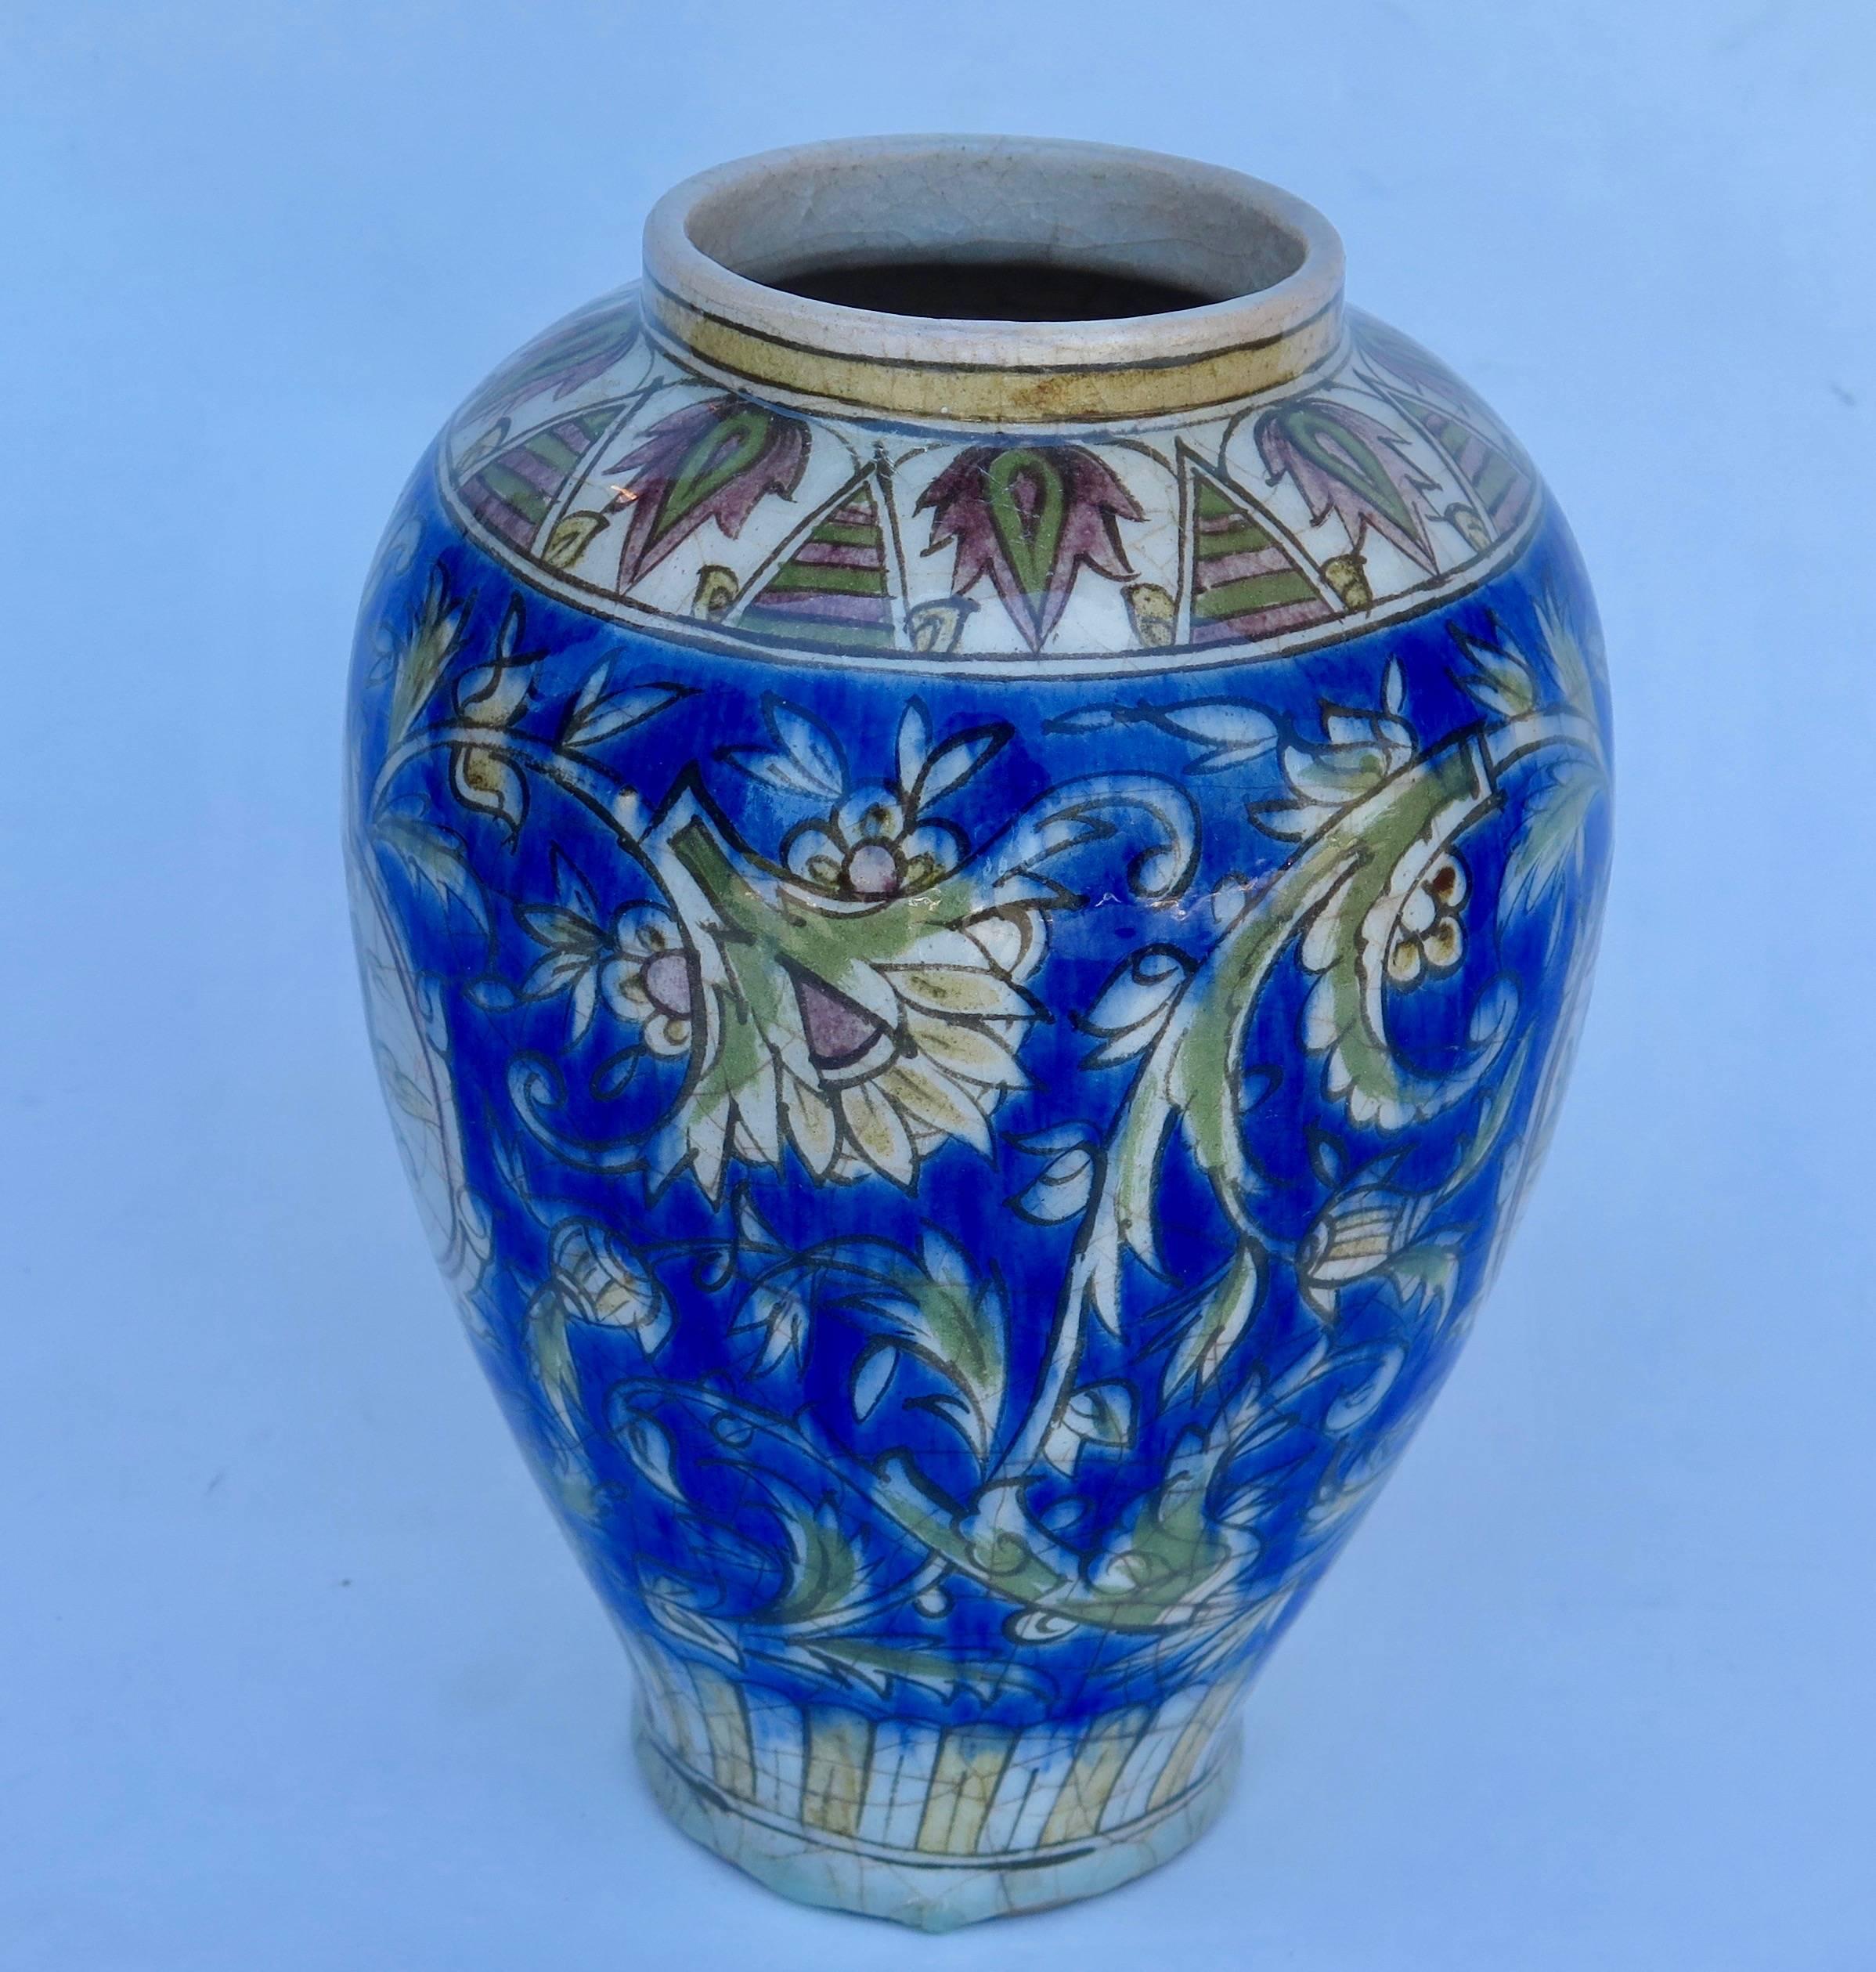 19th century Persian vase with bird motifs.